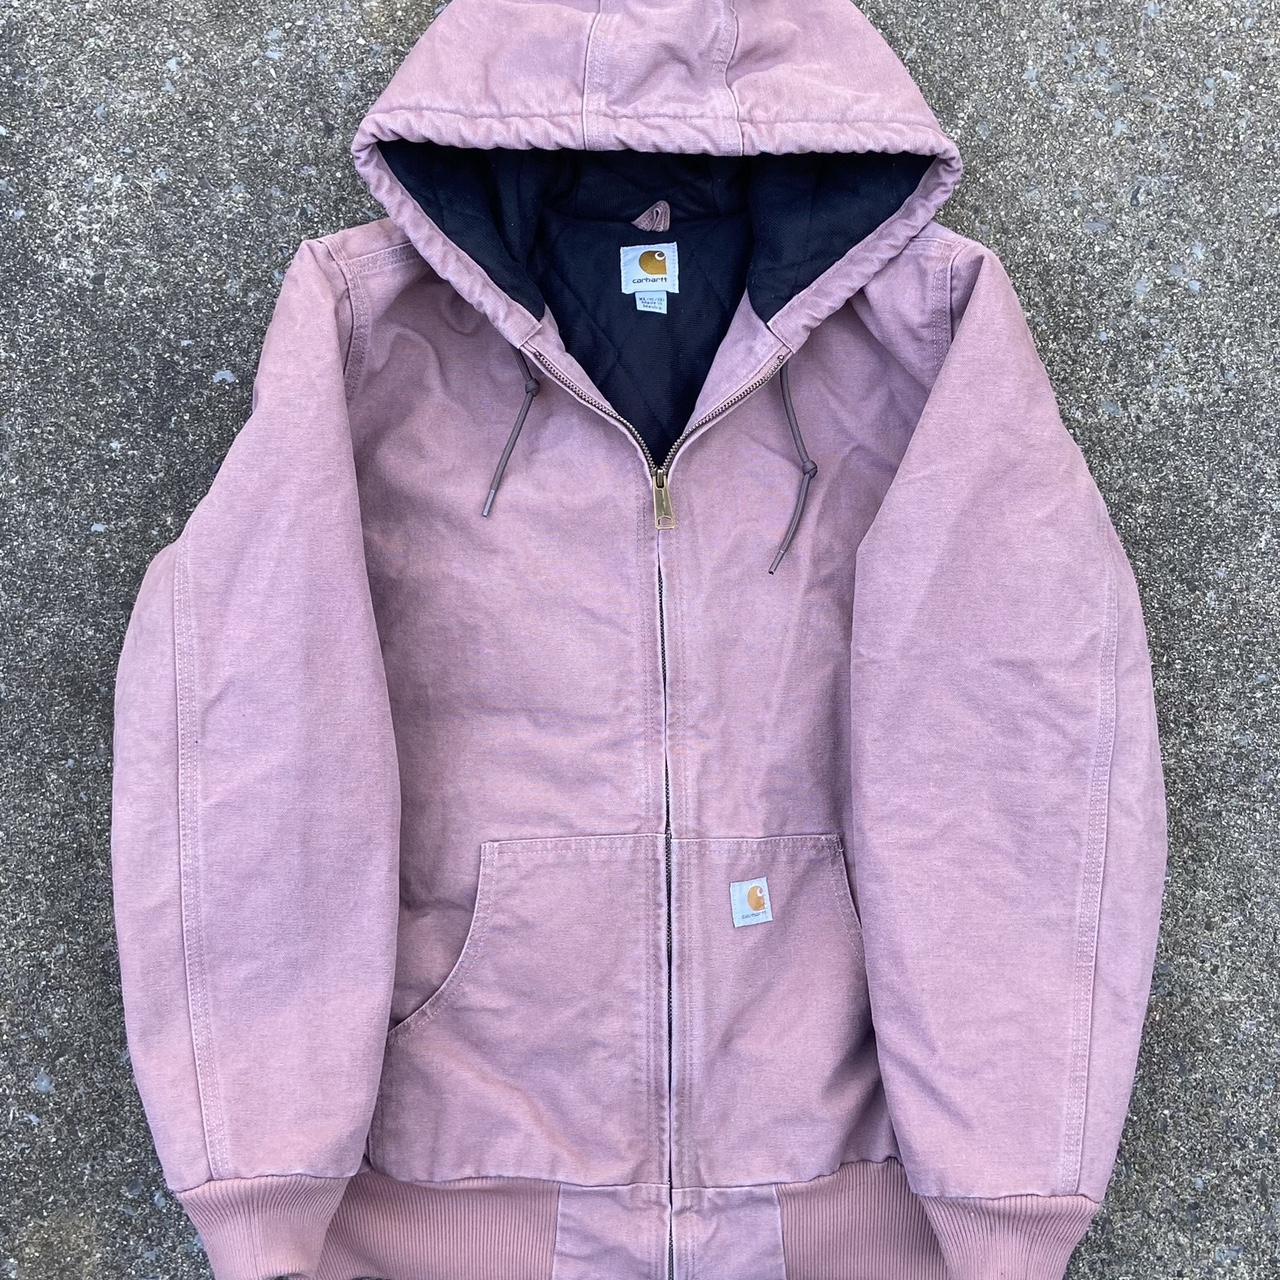 Insane vintage pink carhartt jacket size xl women’s... - Depop